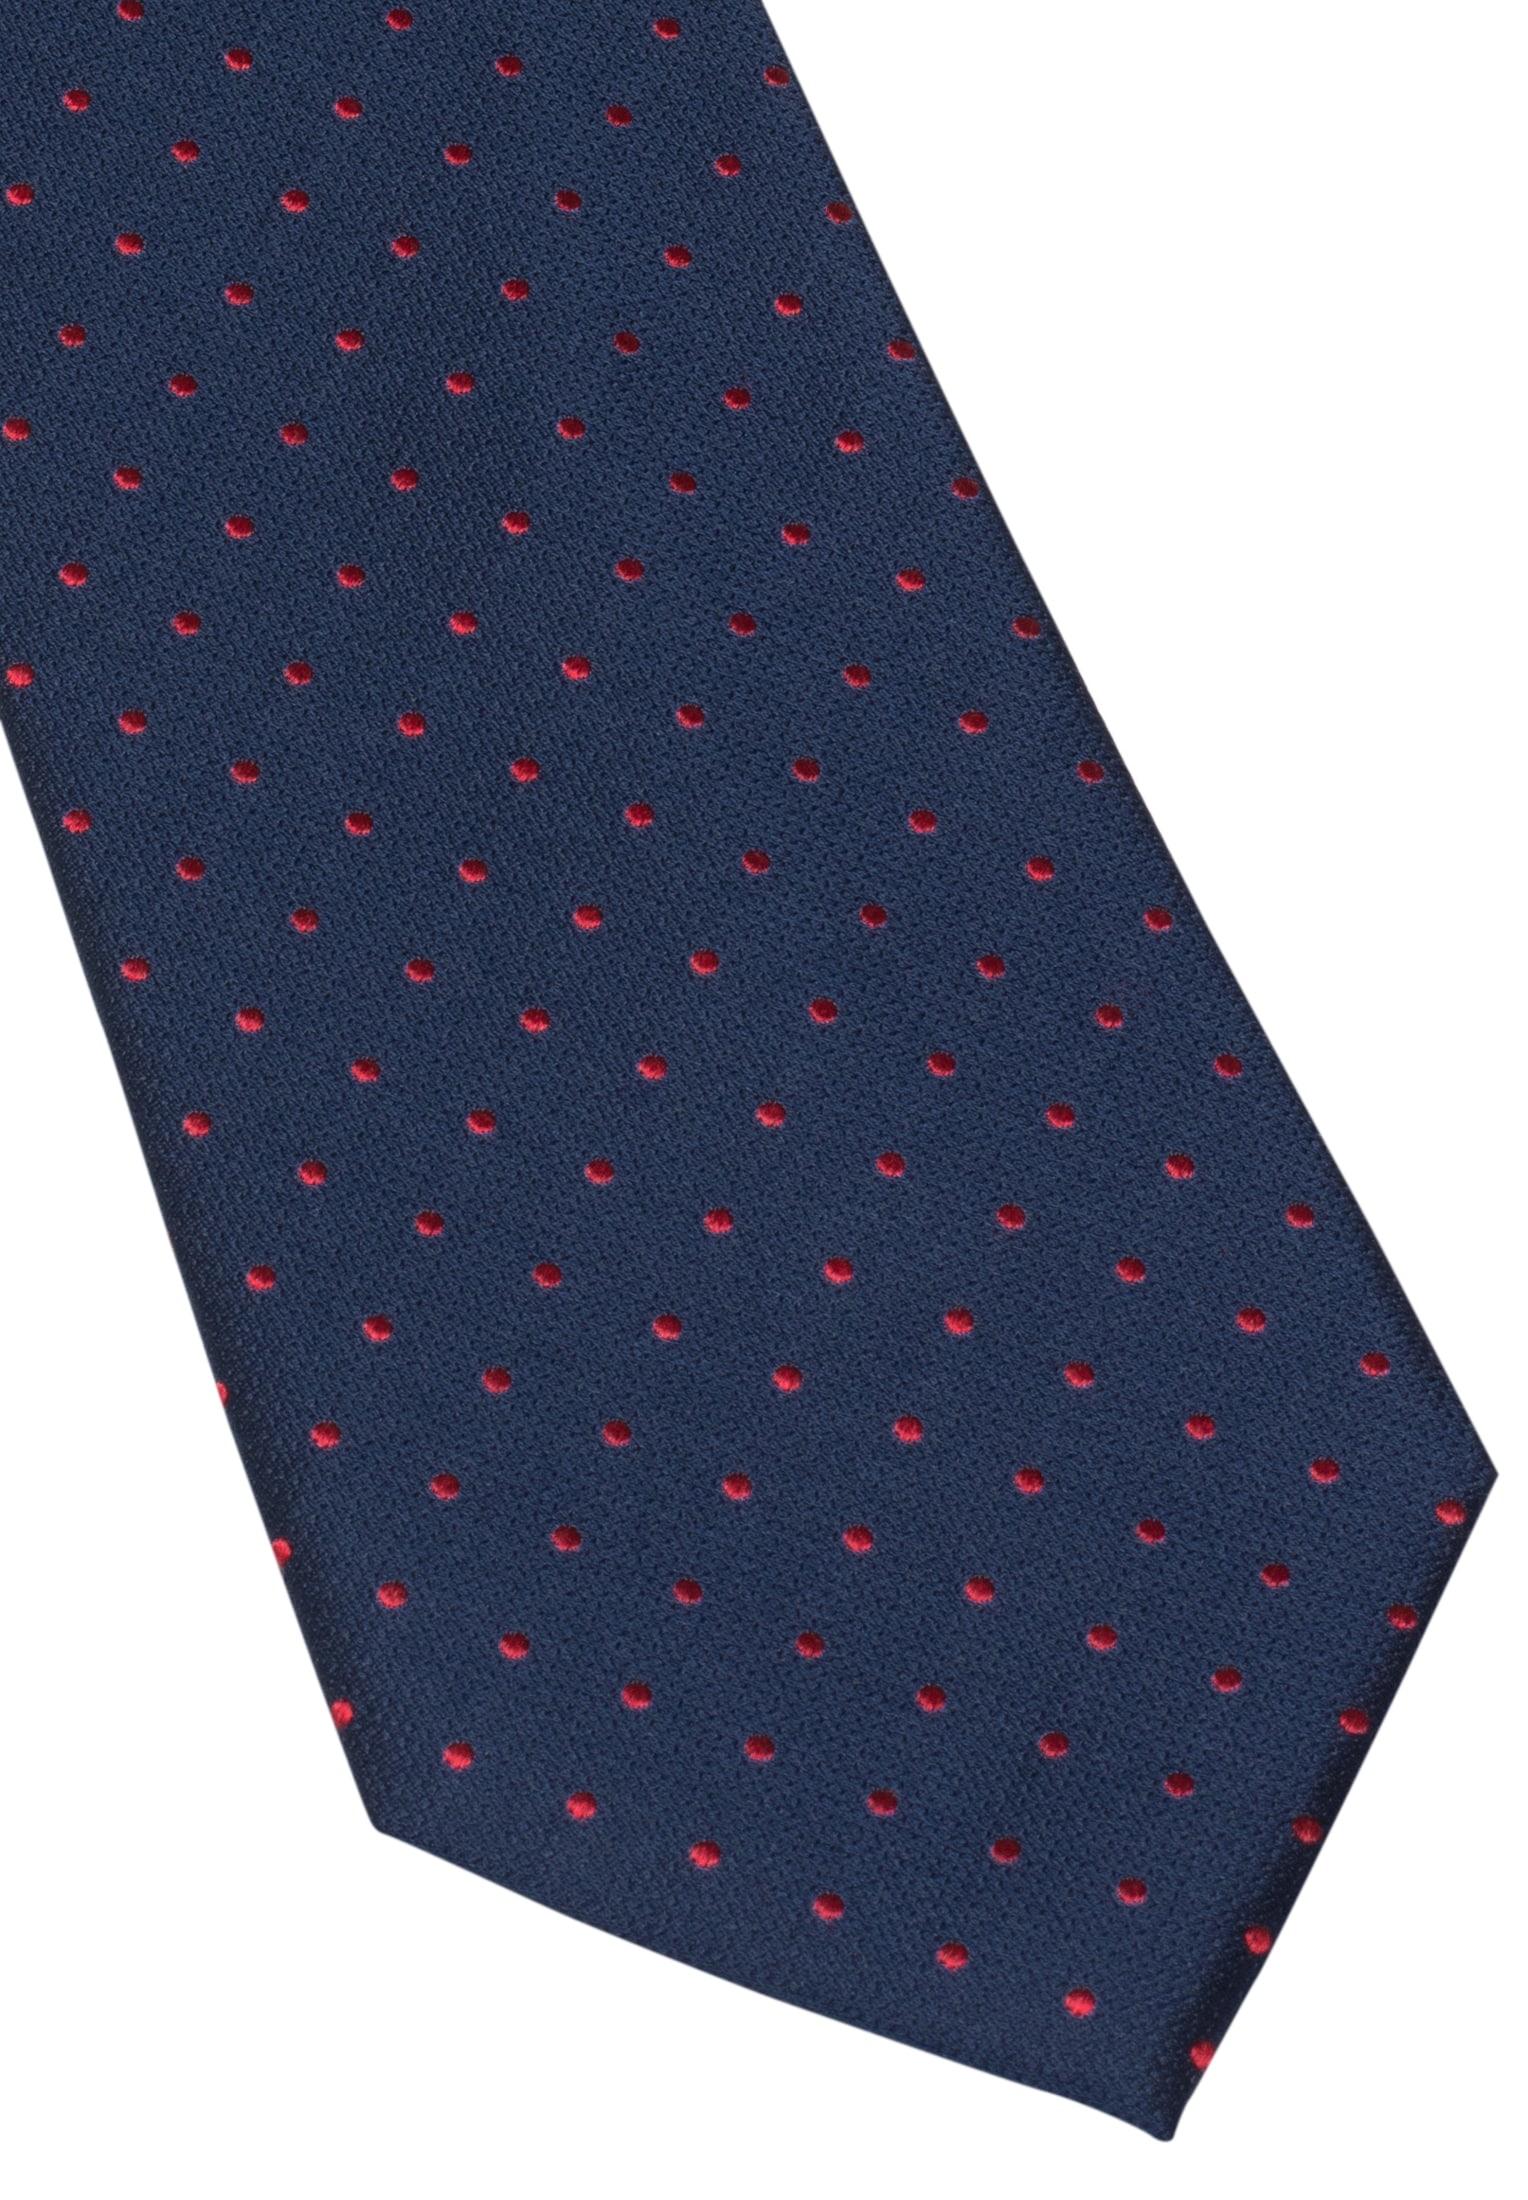 Krawatte in dunkelblau dunkelblau | 142 | 1AC00022-01-81-142 getupft 